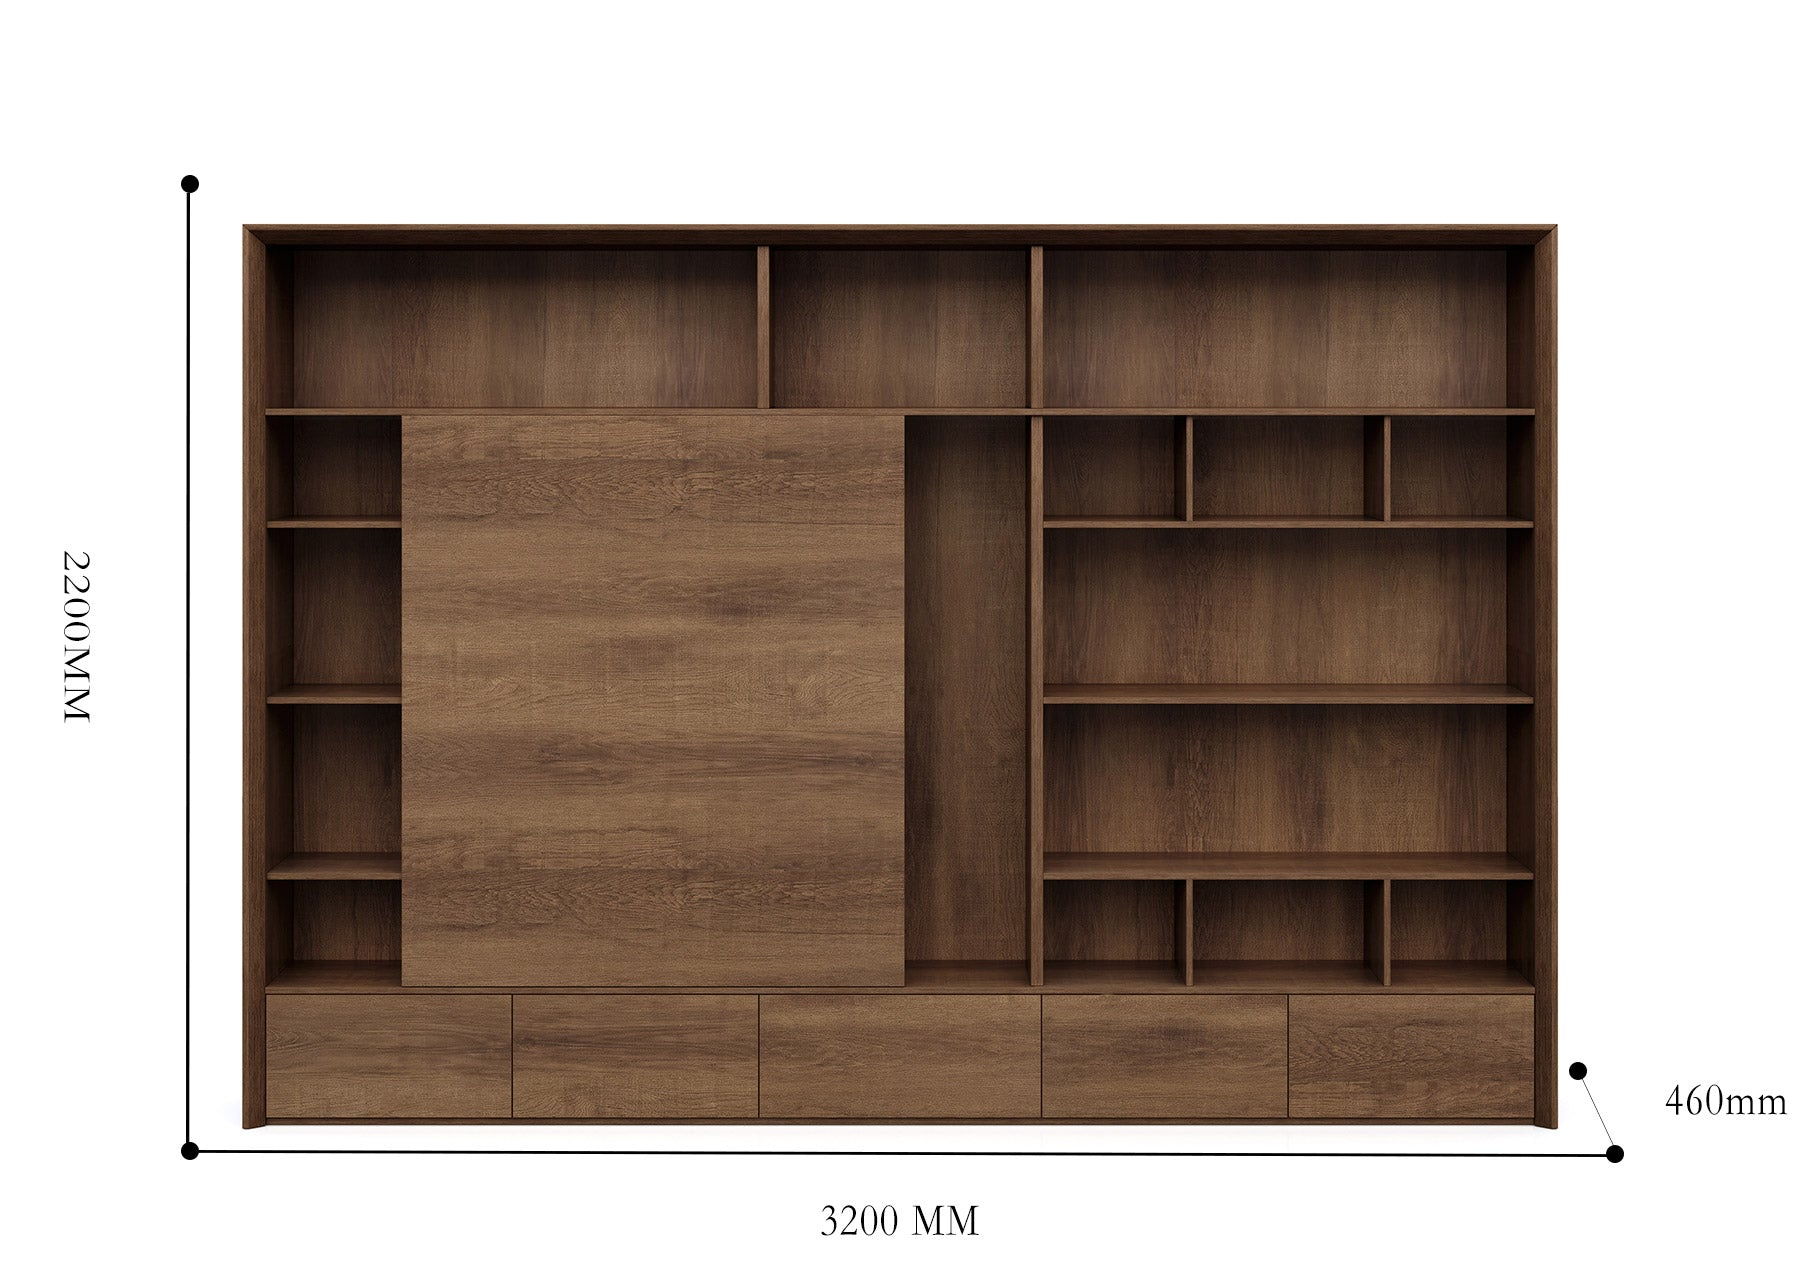 Dreasytech bookcase bookshelf cabinet 3.2m size